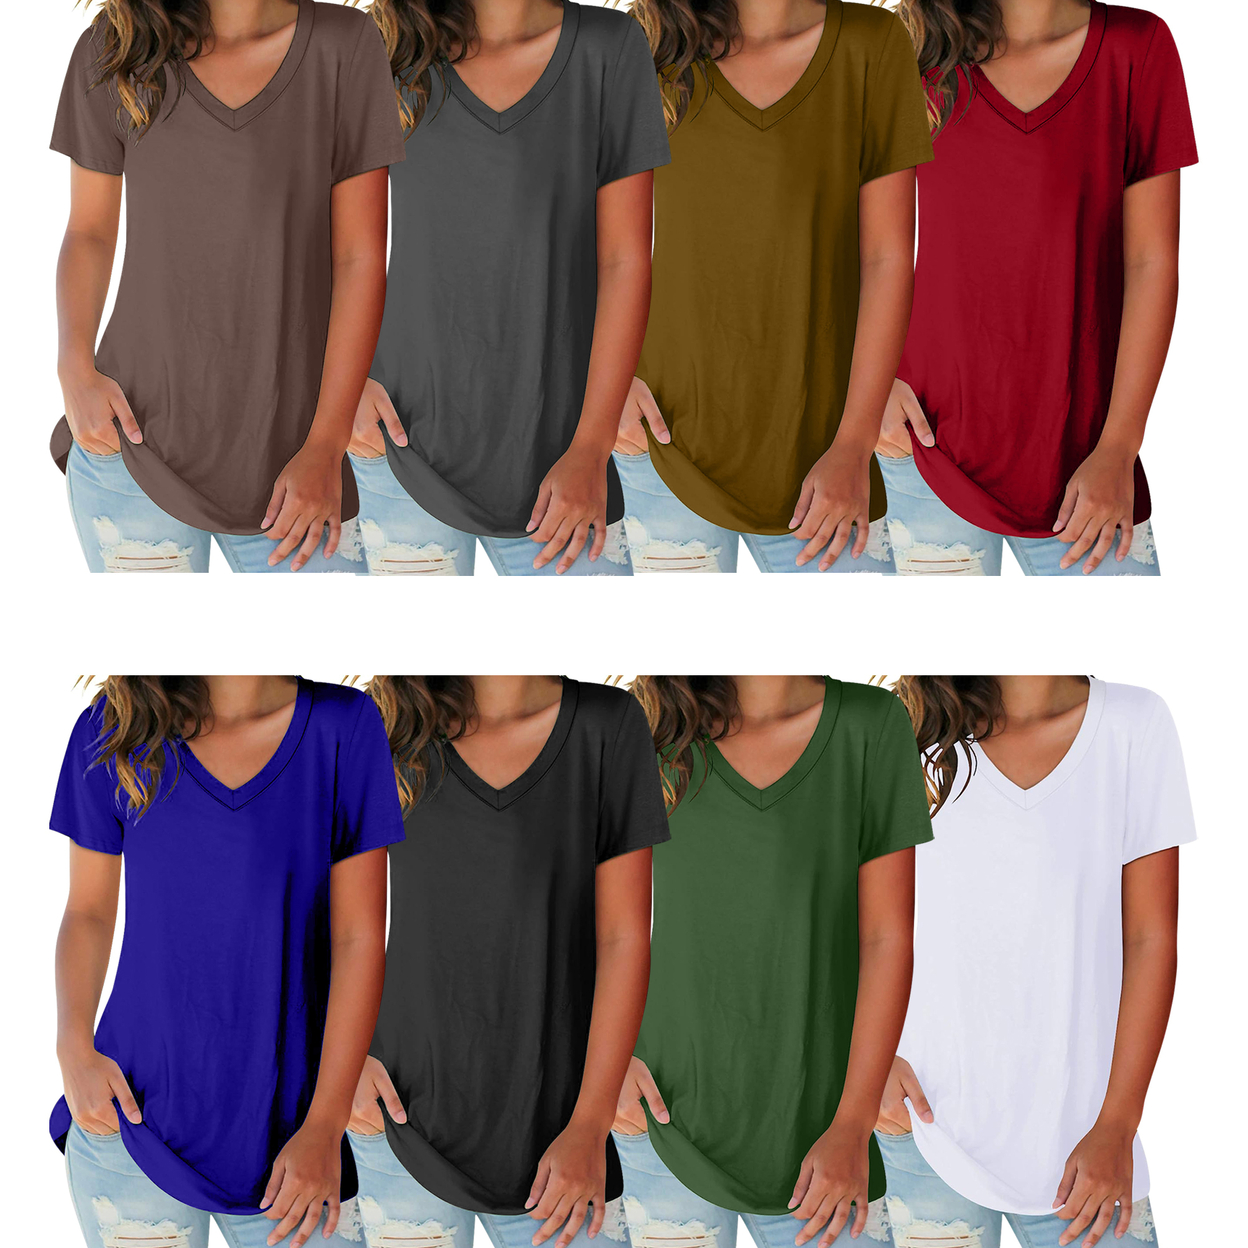 2-Pack: Women's Ultra Soft Smooth Cotton Blend Basic V-Neck Short Sleeve Shirts - White & Green, Medium